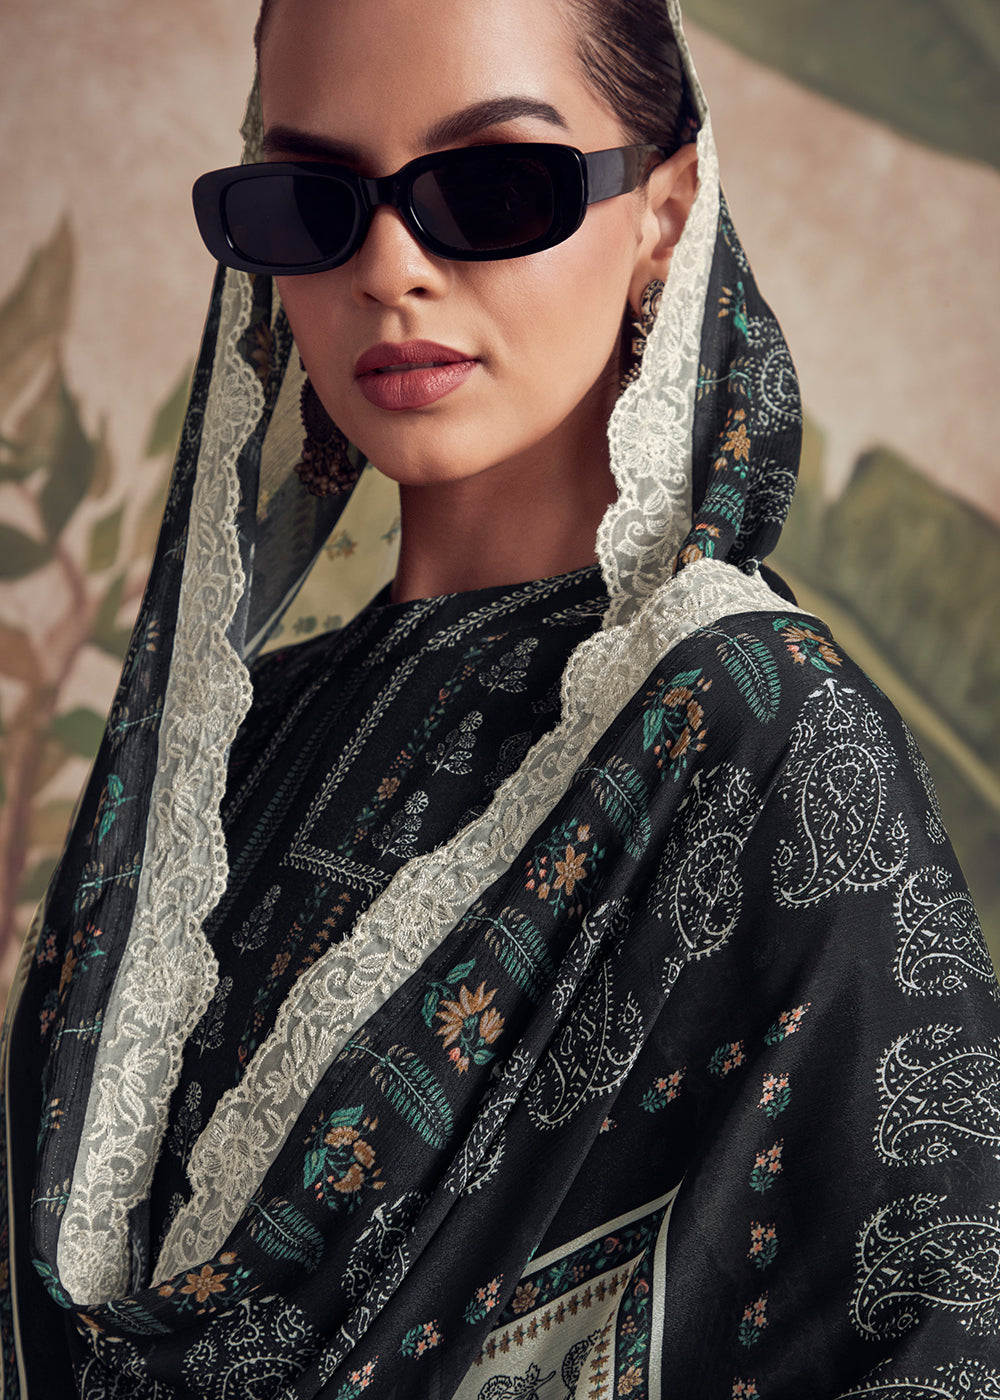 Buy Now Digital Printed Black Pakistani Style Salwar Suit Online in USA, UK, Canada, Germany, Australia & Worldwide at Empress Clothing.